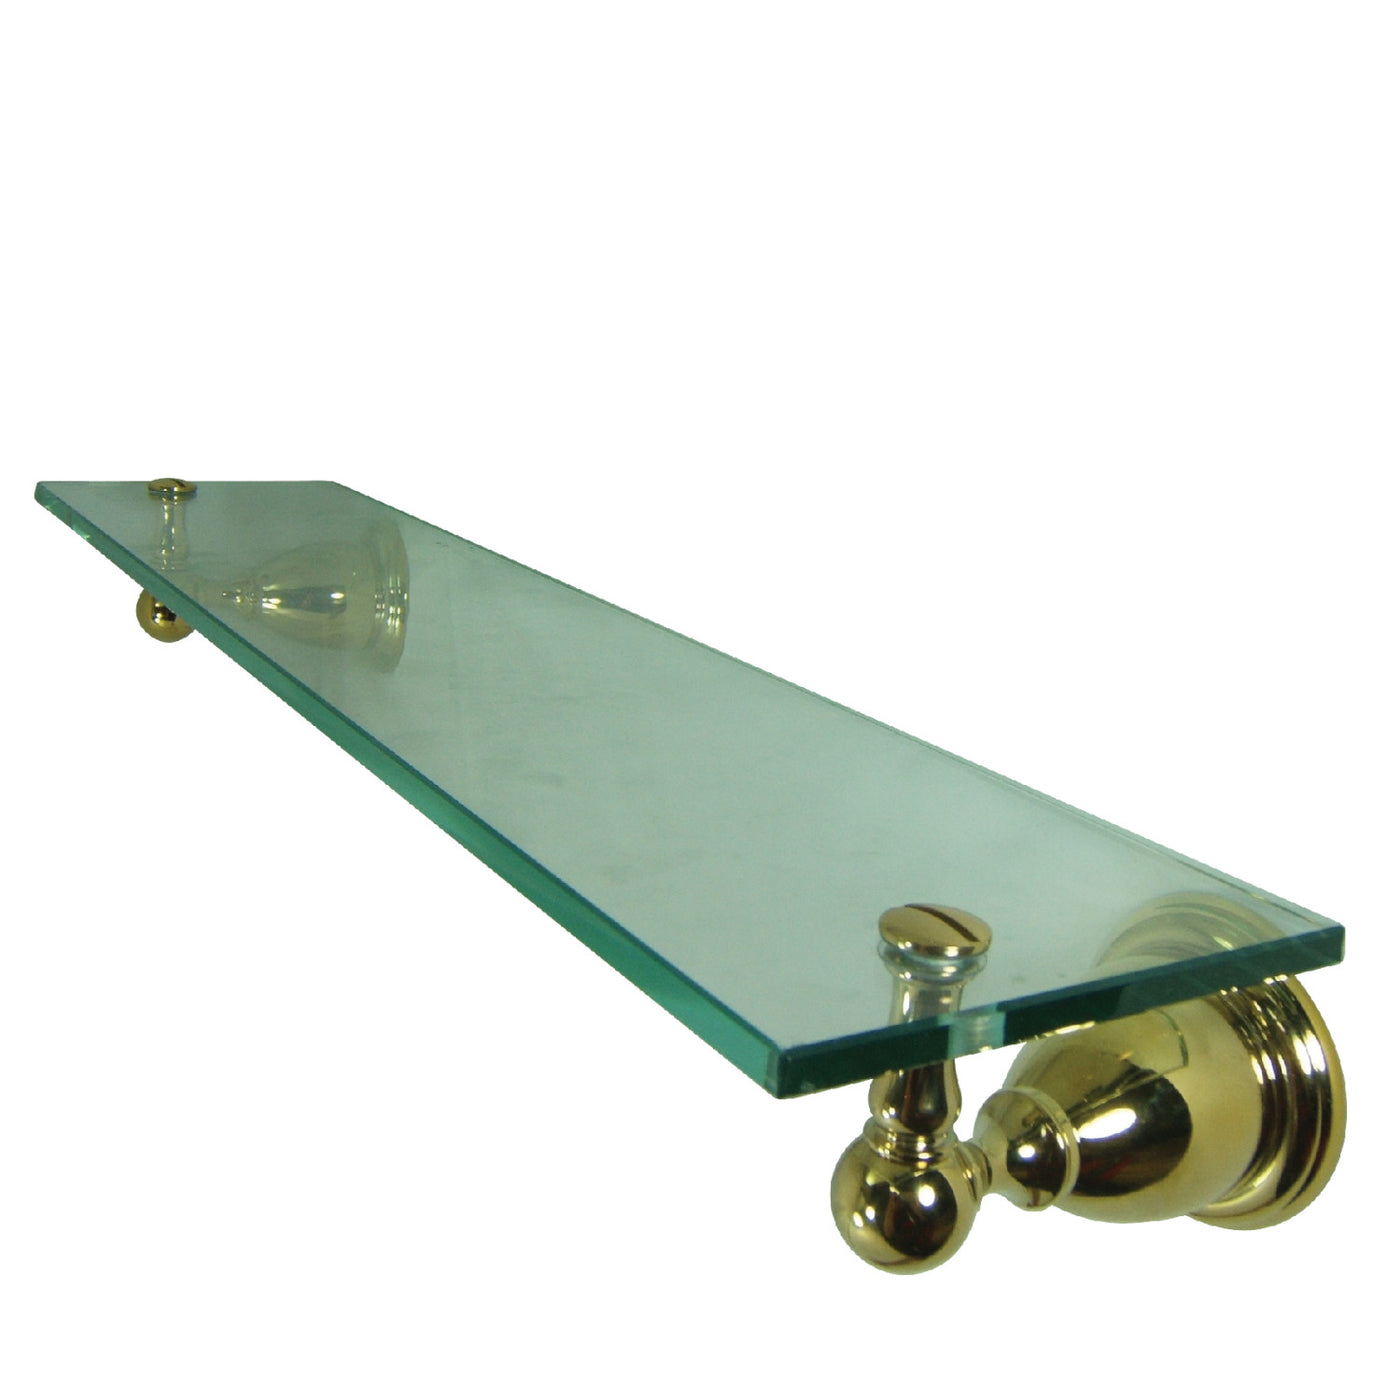 Elements of Design EBA1759PB Bathroom Glass Shelf, Polished Brass